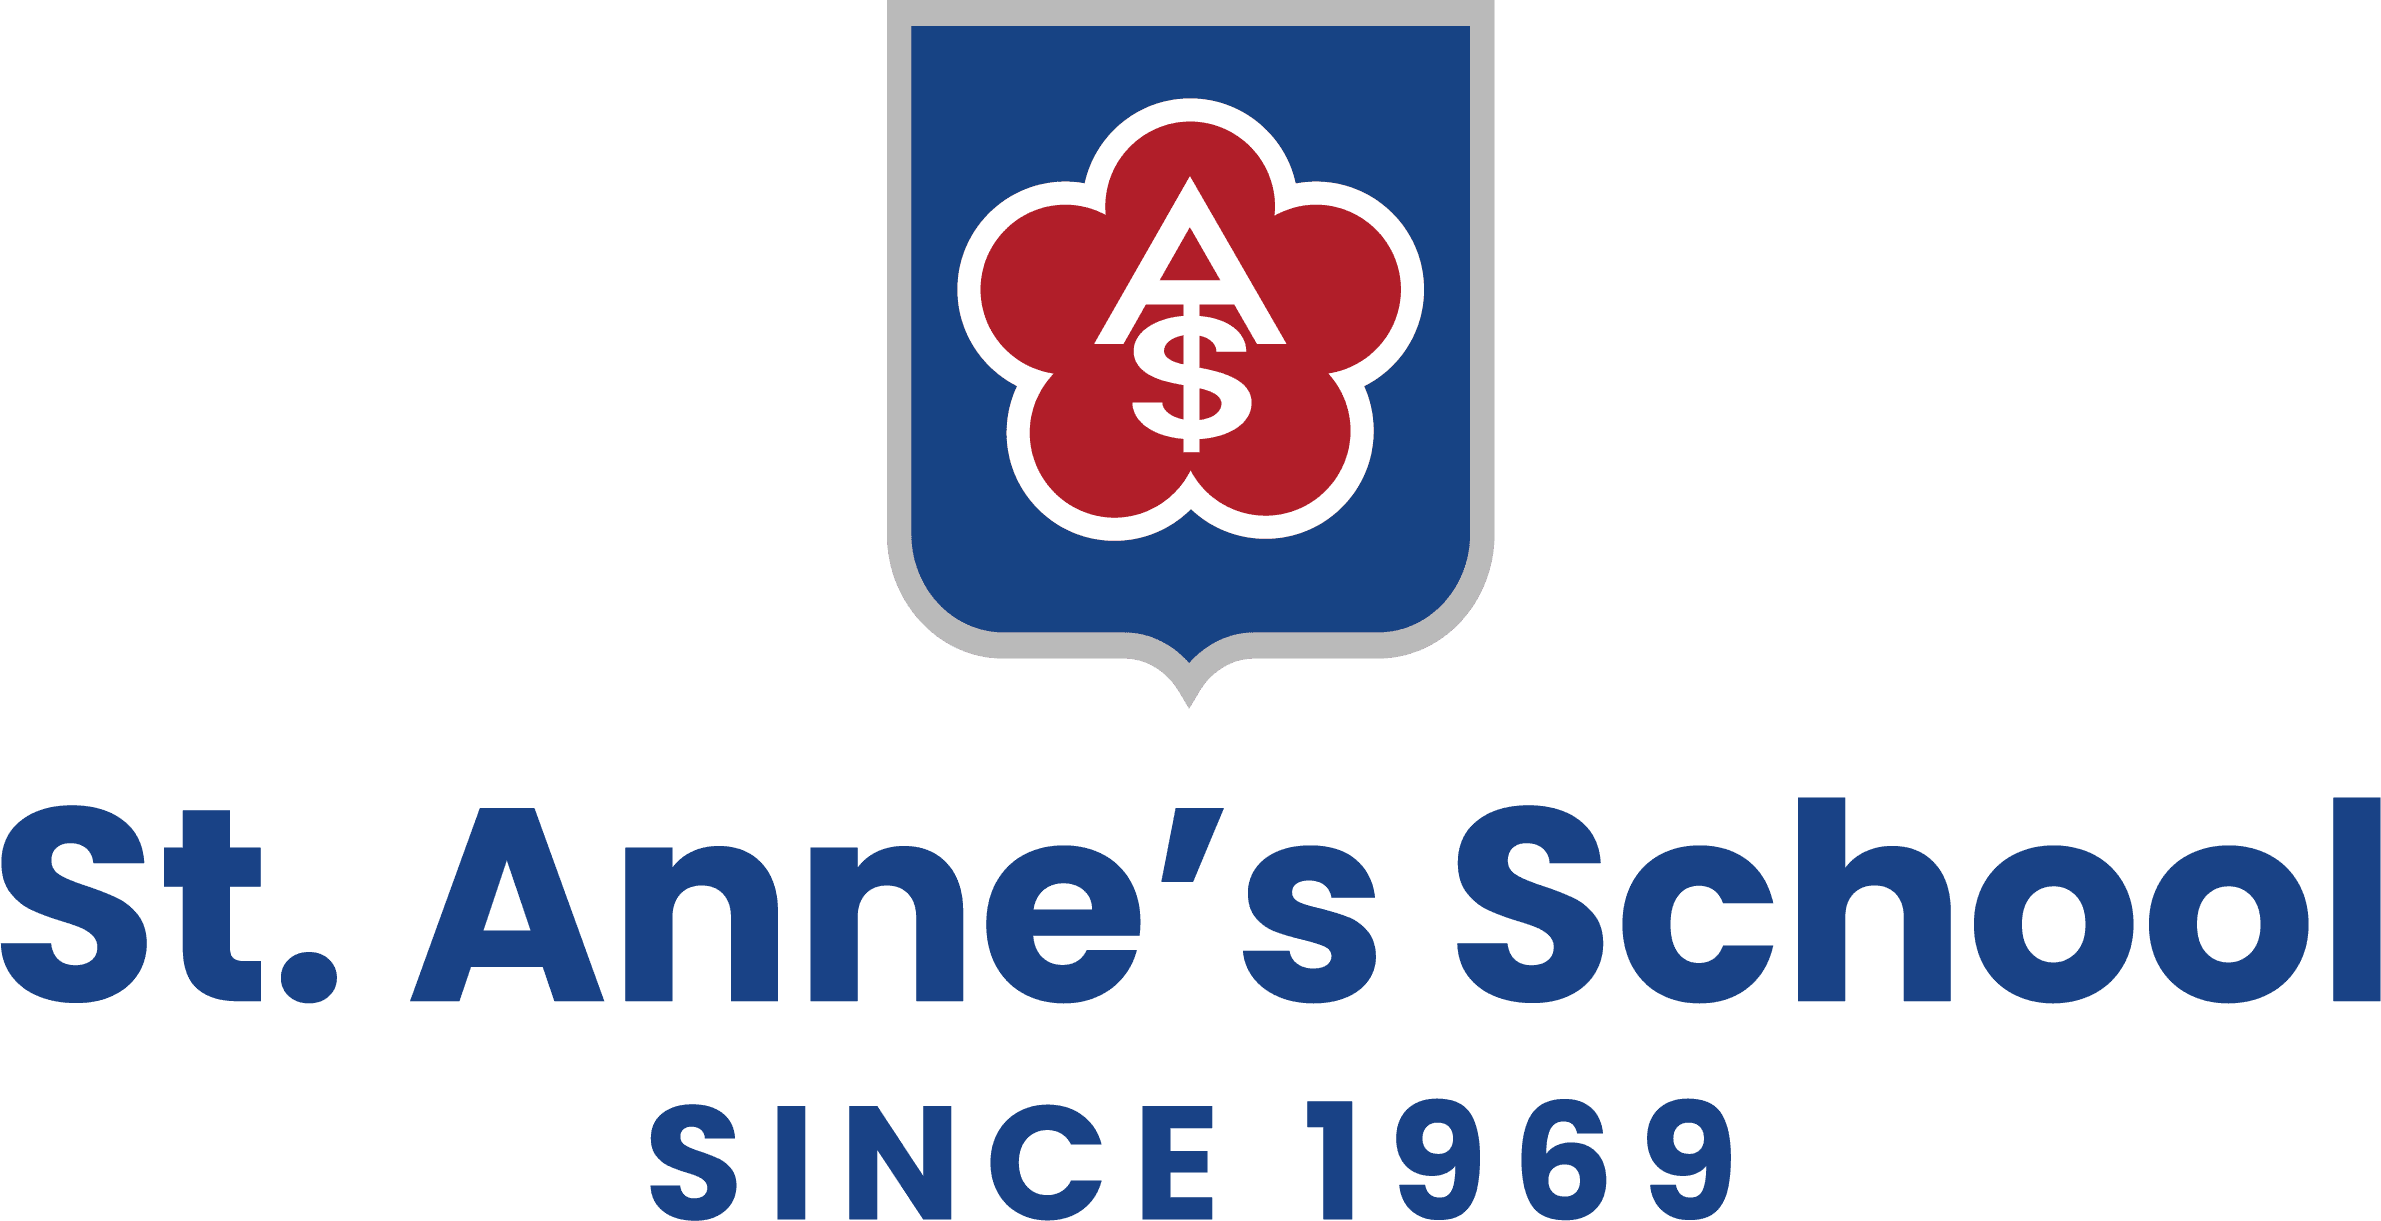 St. Anne's School